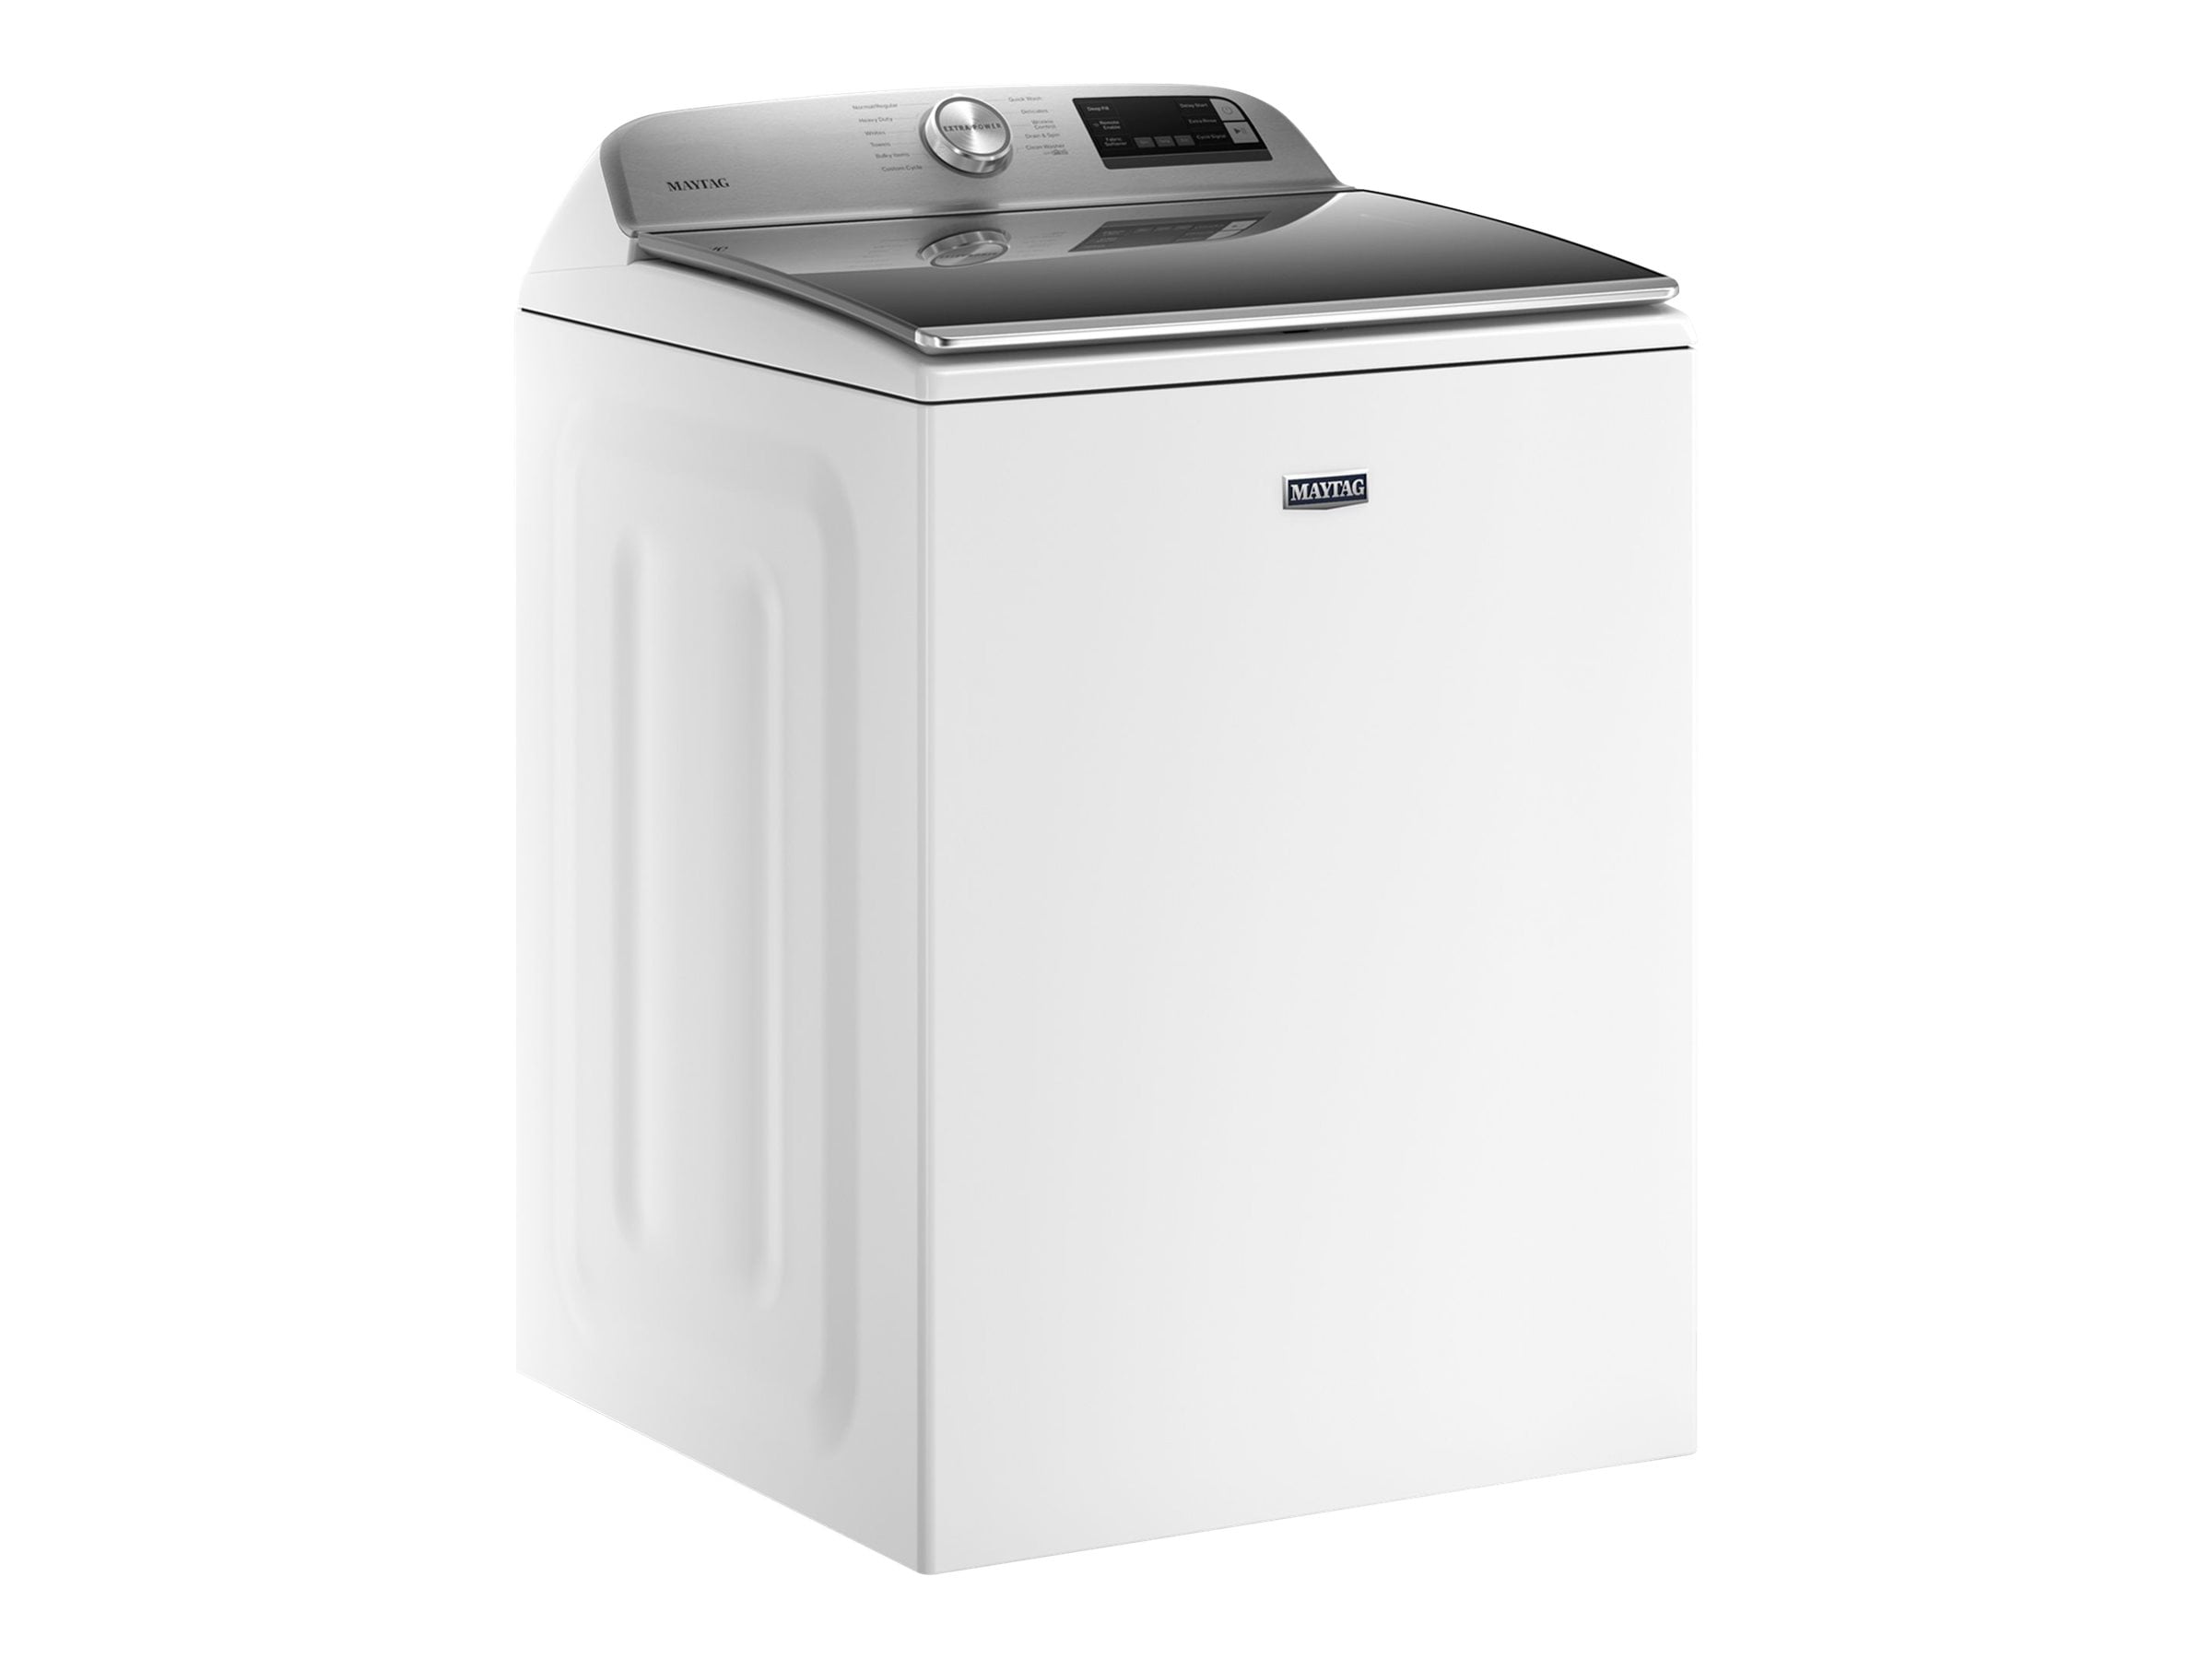 ZENSTYLE 6lbs Capacity Mini Washing Machine Compact Counter Top